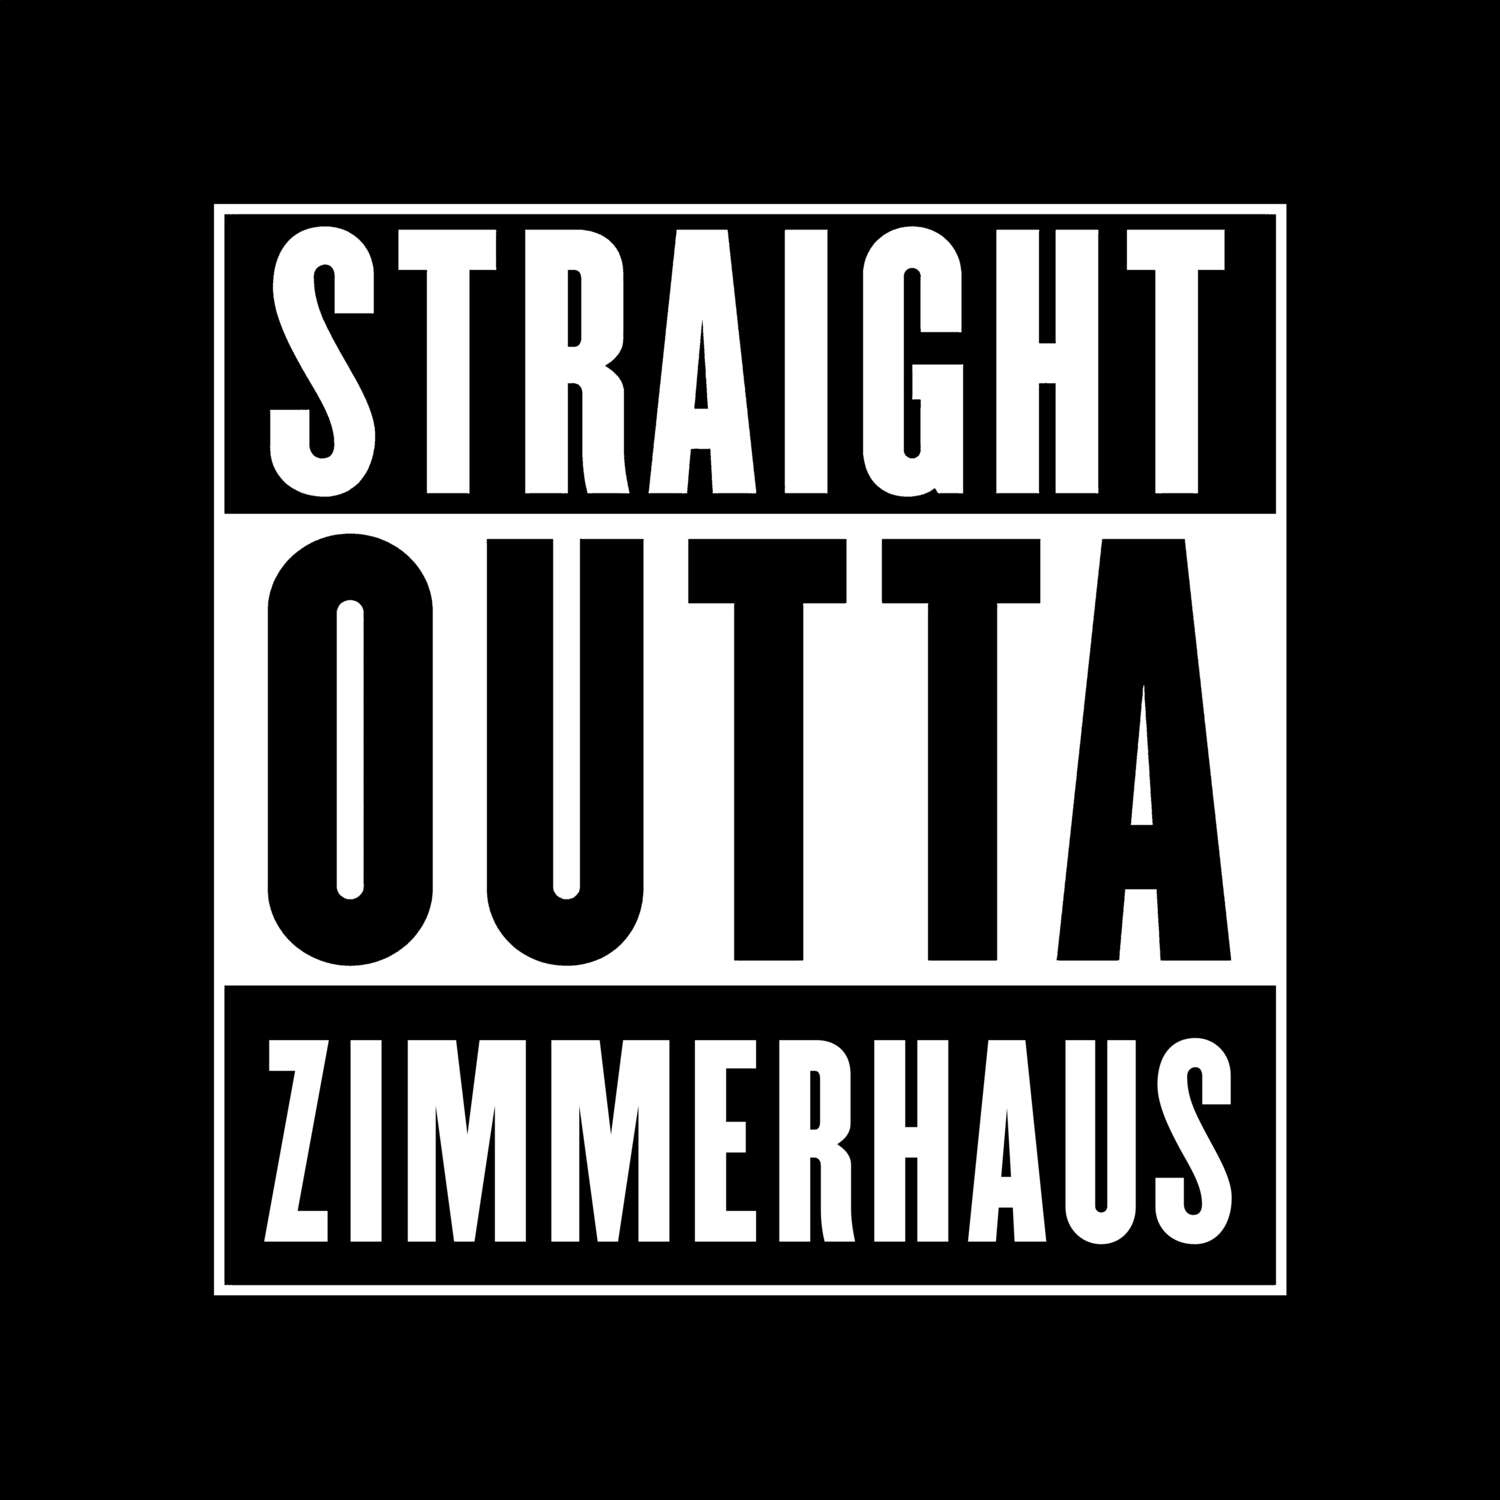 Zimmerhaus T-Shirt »Straight Outta«